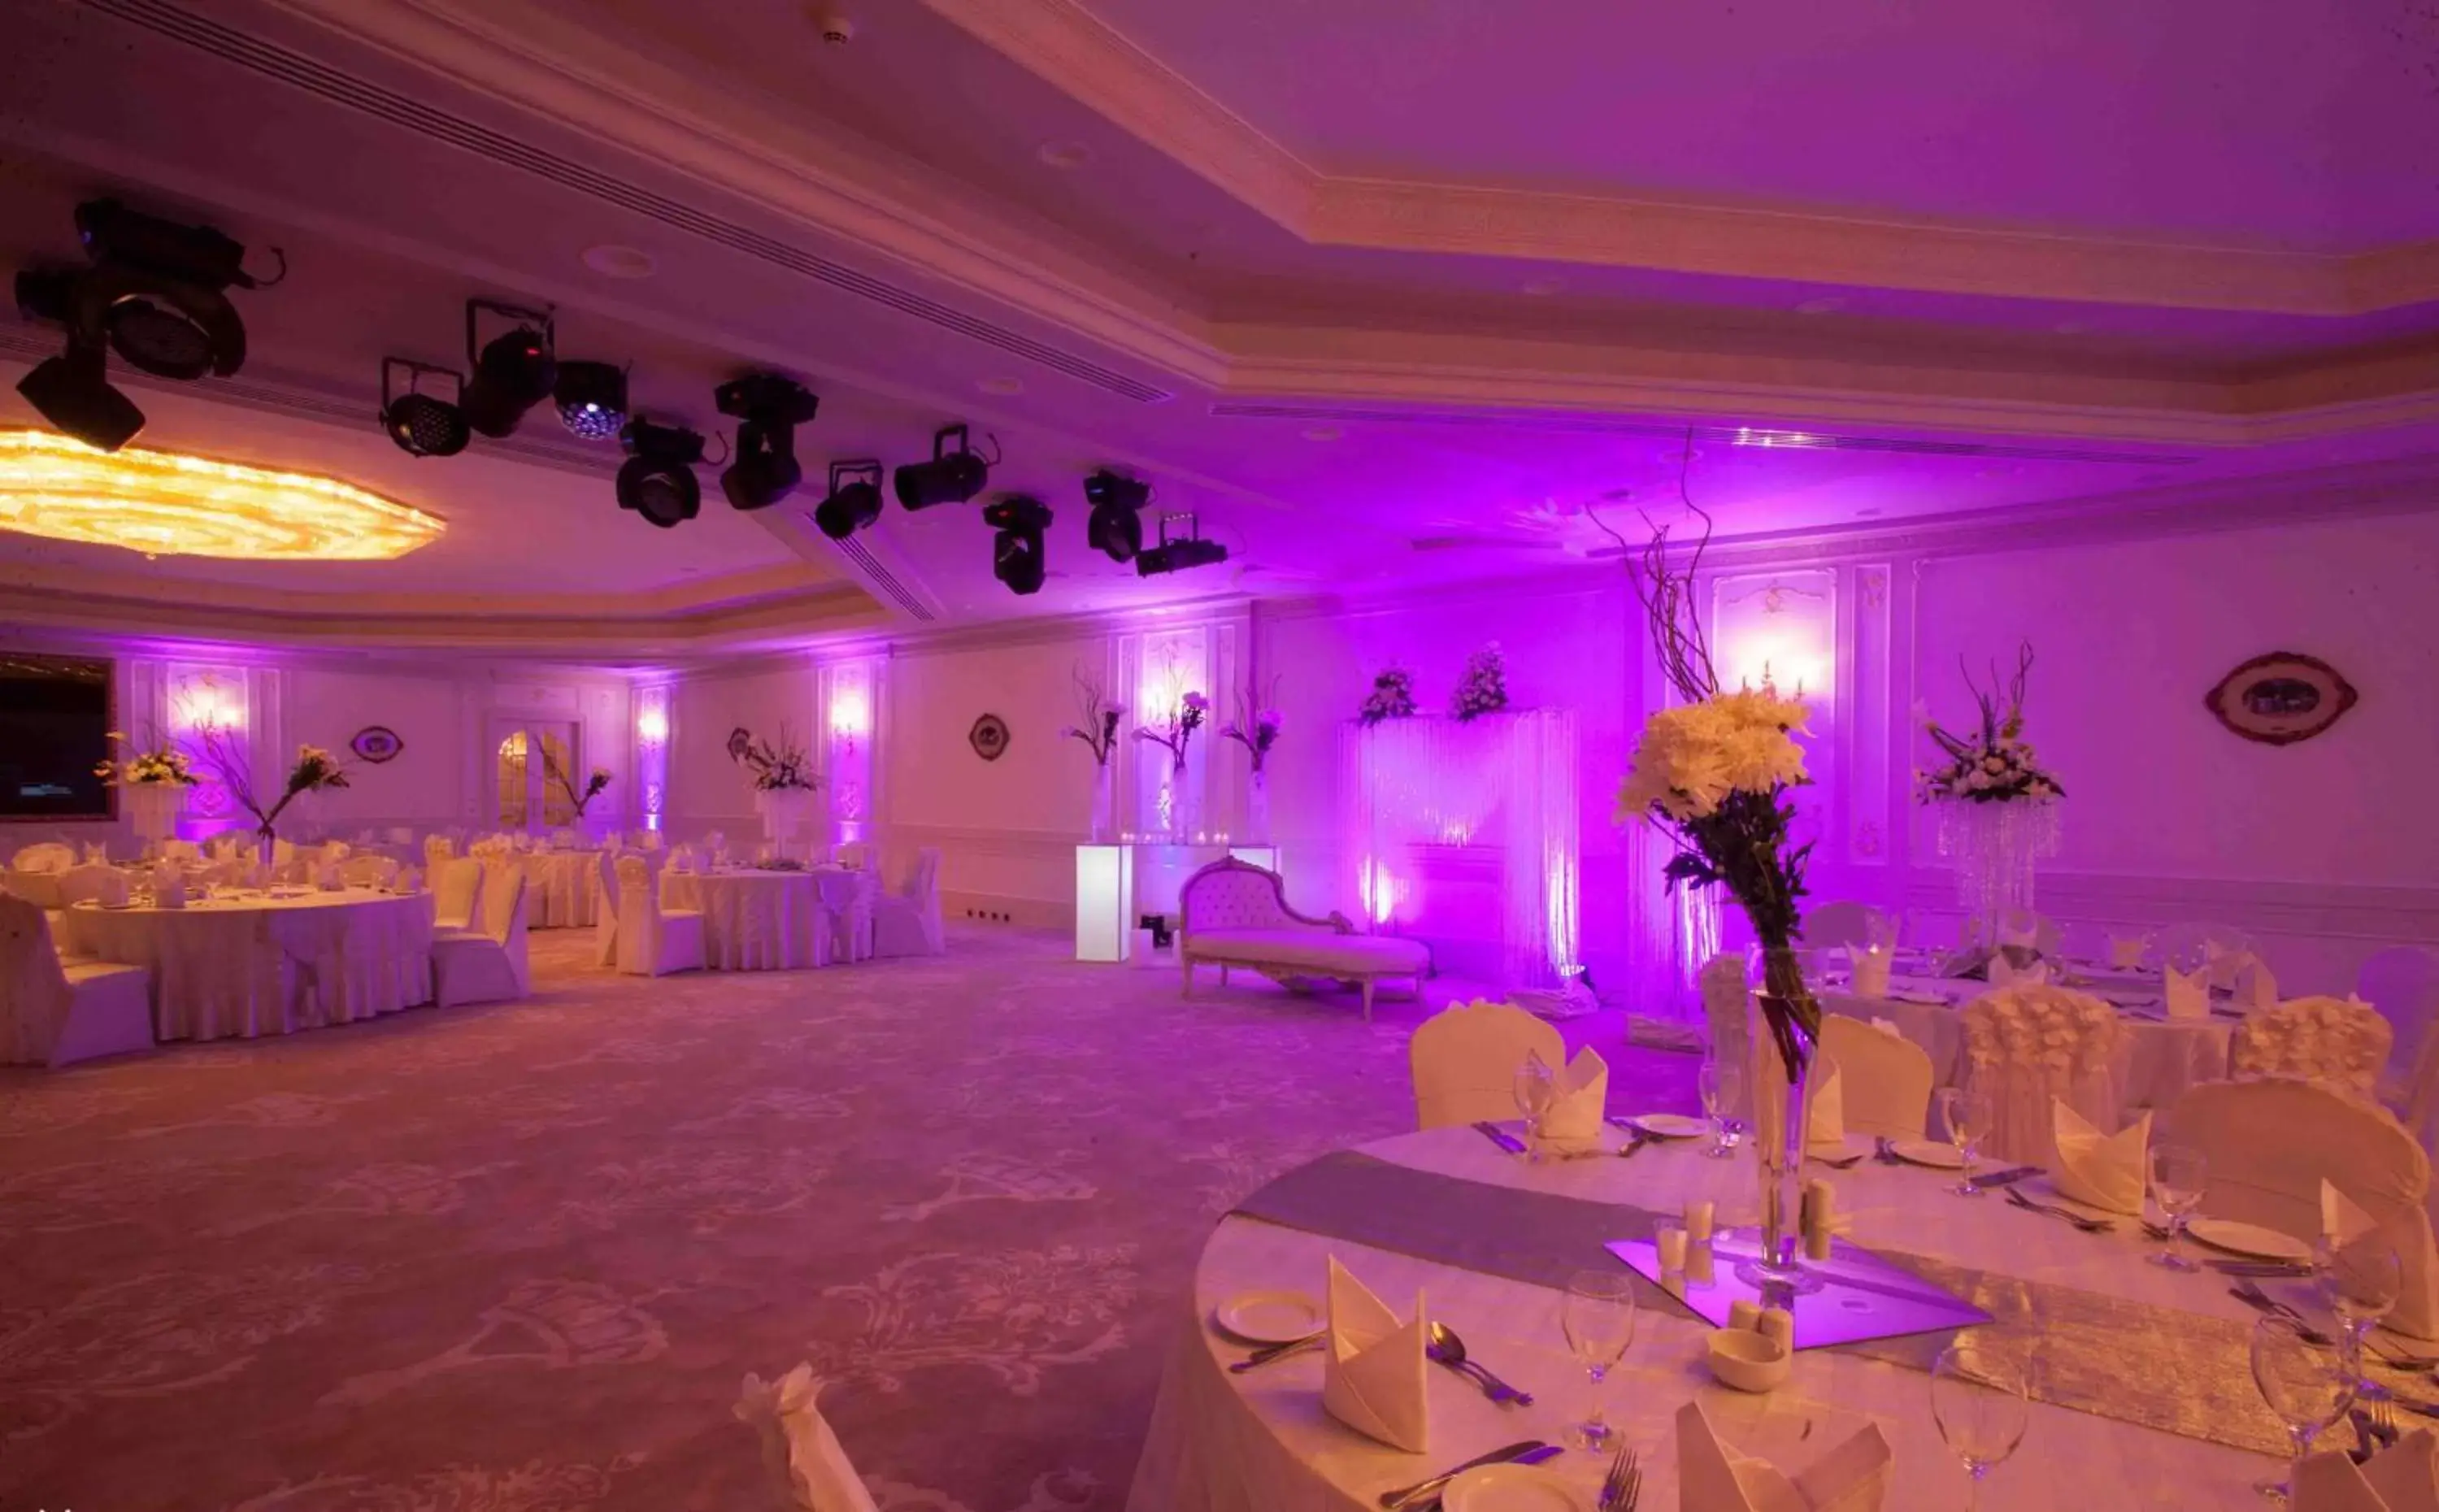 Meeting/conference room, Banquet Facilities in Hilton Alexandria Corniche